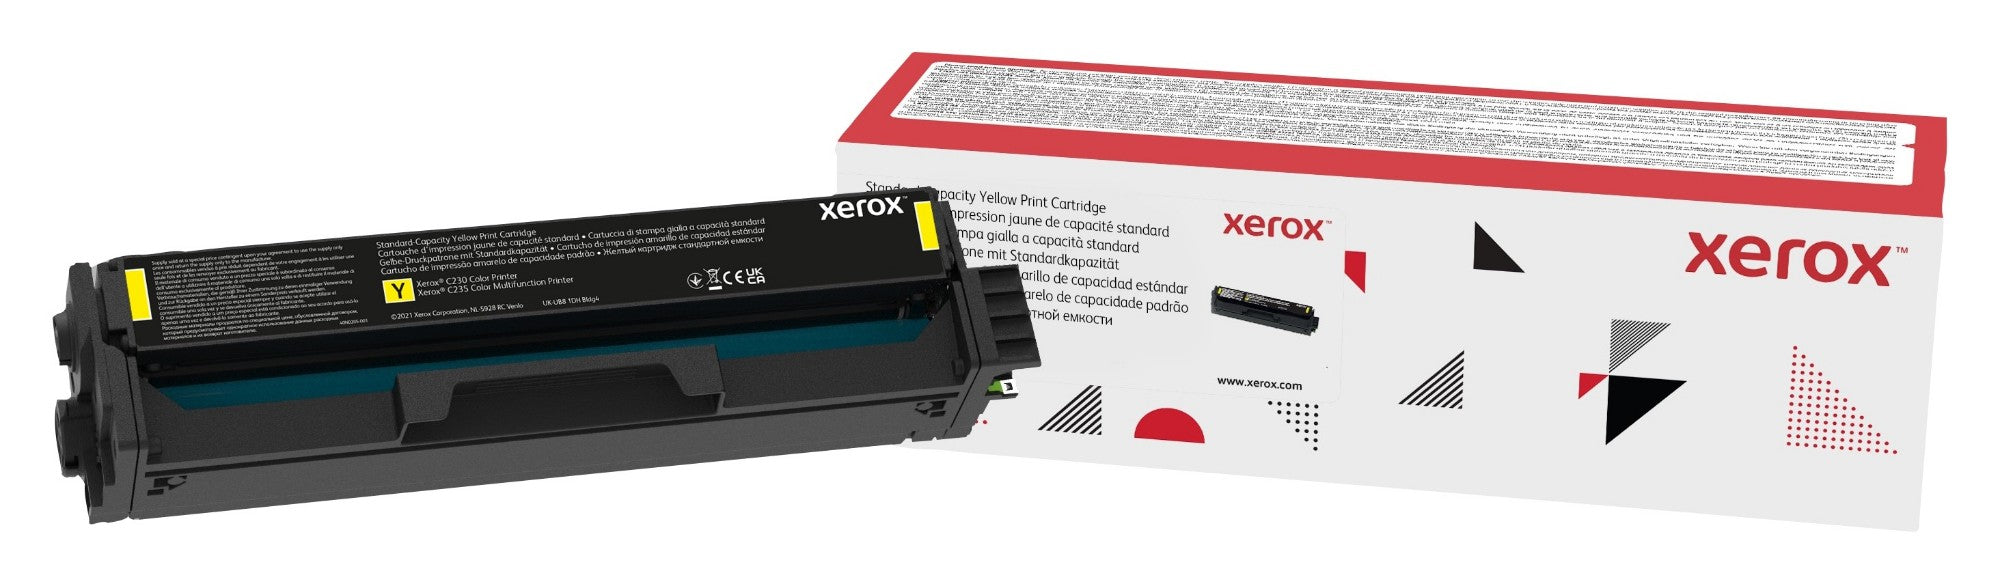 Xerox 006R04386 Toner cartridge yellow, 1.5K pages ISO/IEC 19752 for Xerox C 230